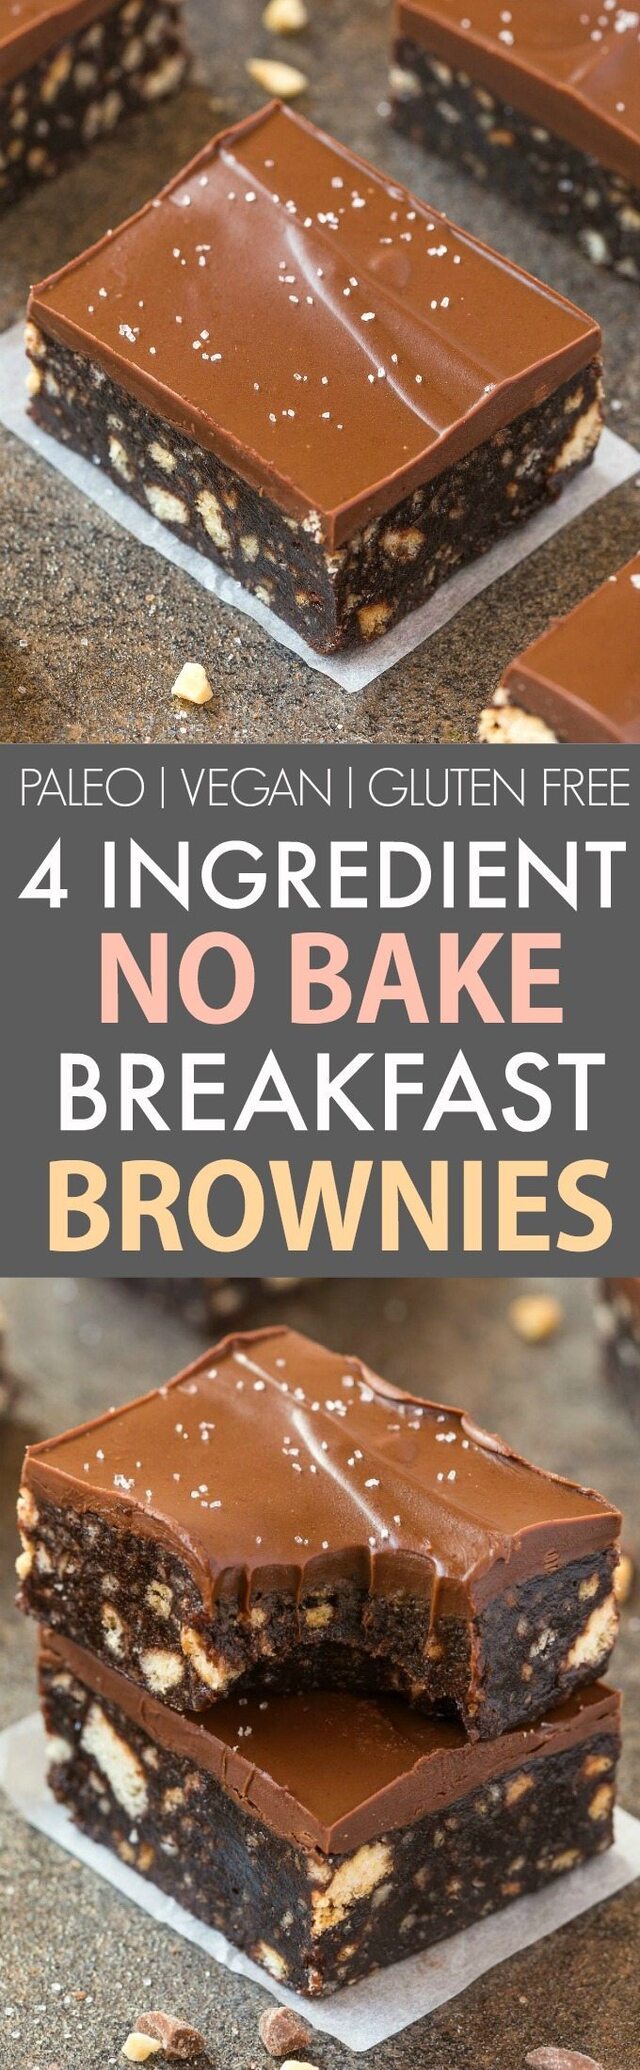 4 Ingredient No Bake Flourless Breakfast Brownies (Paleo, Vegan, Gluten Free)